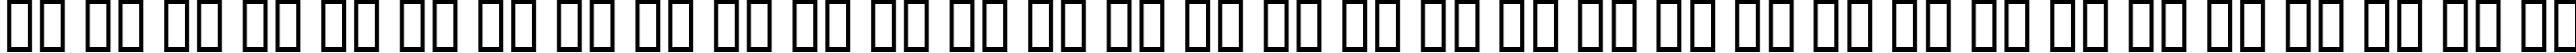 Пример написания русского алфавита шрифтом Archery Black Condensed